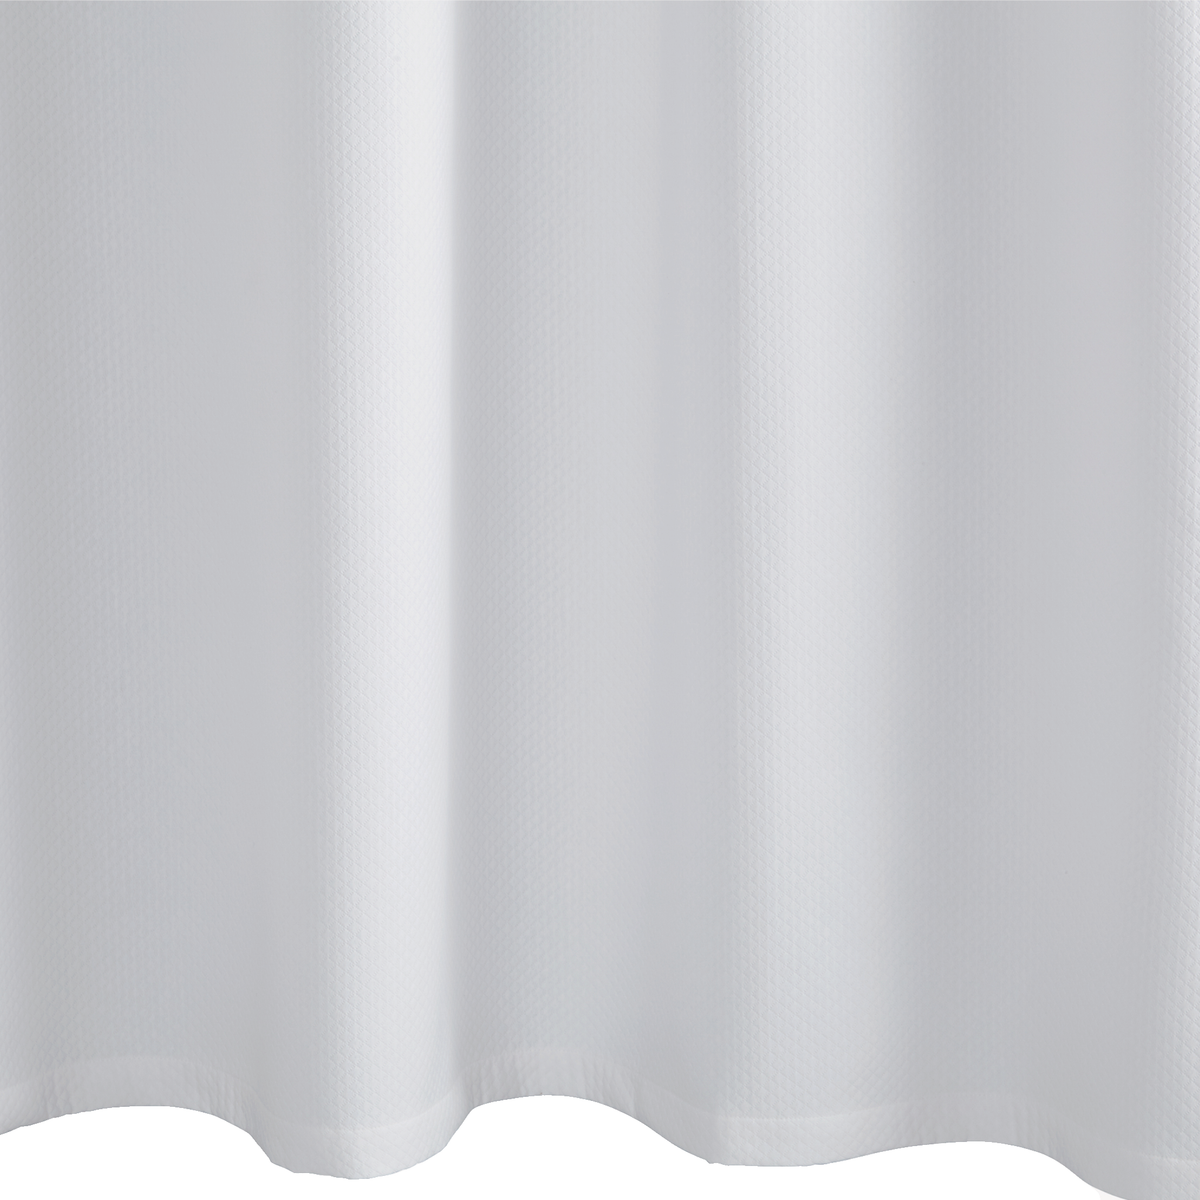 Fabric Closeup of Matouk Diamond Pique Shower Curtain in White Color